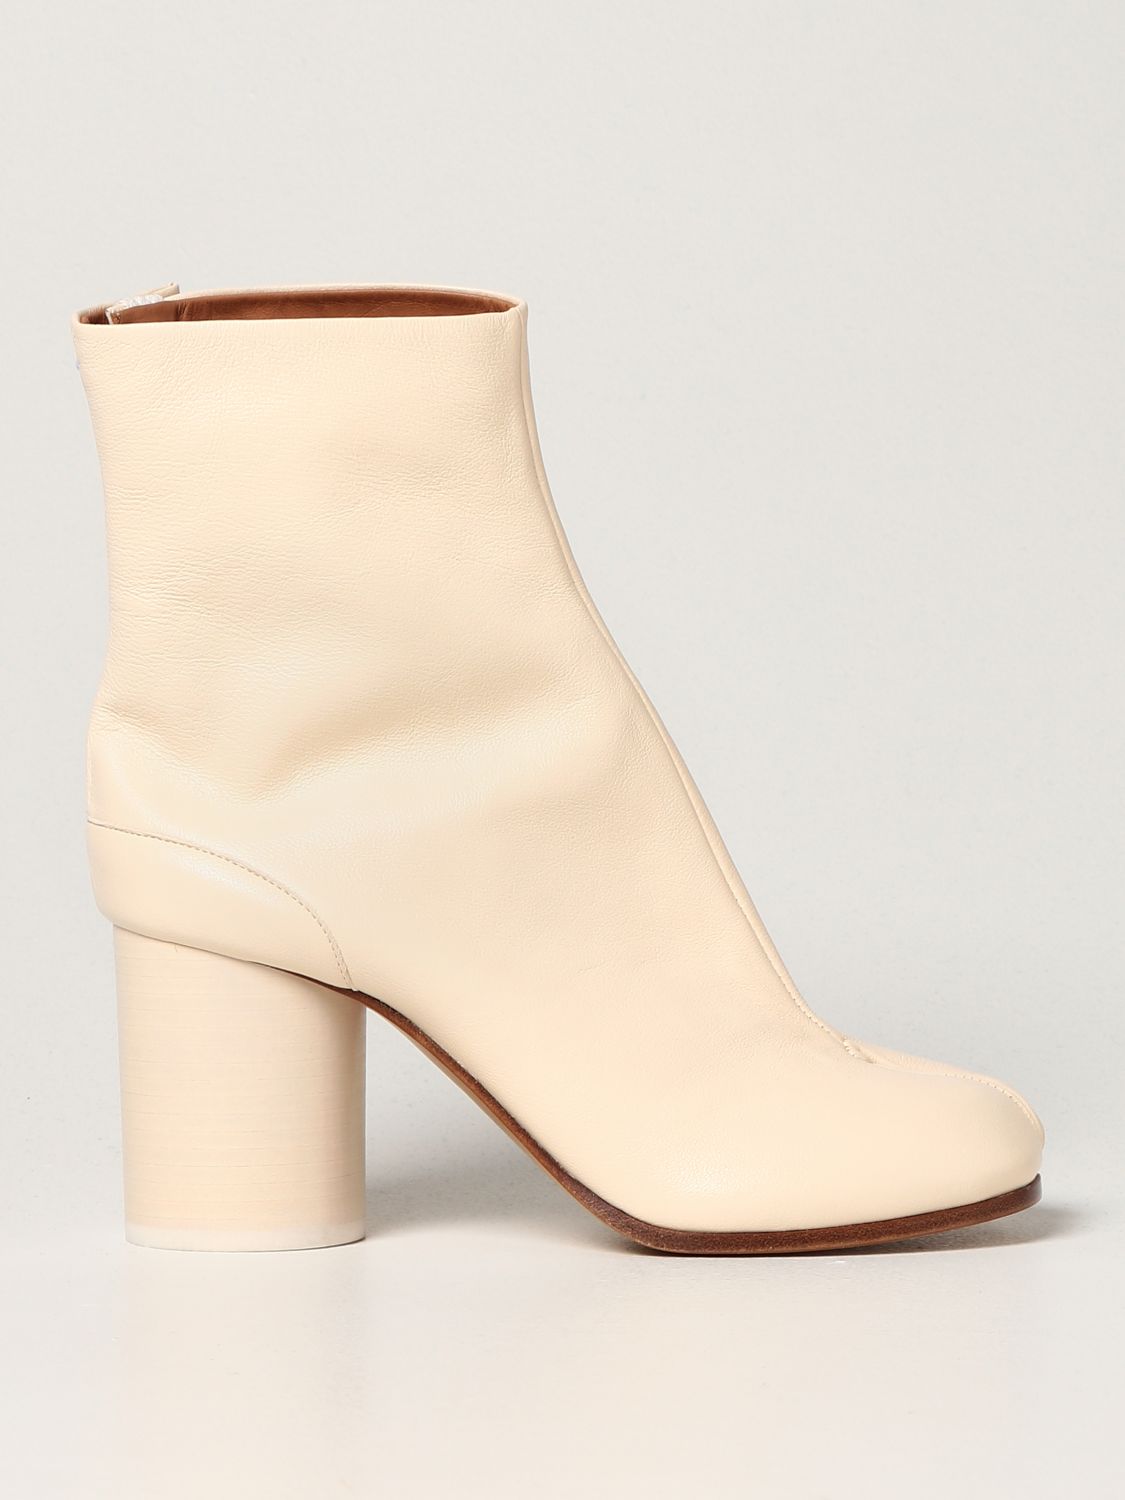 MAISON MARGIELA: Tabi leather ankle boots | Flat Booties Maison ...